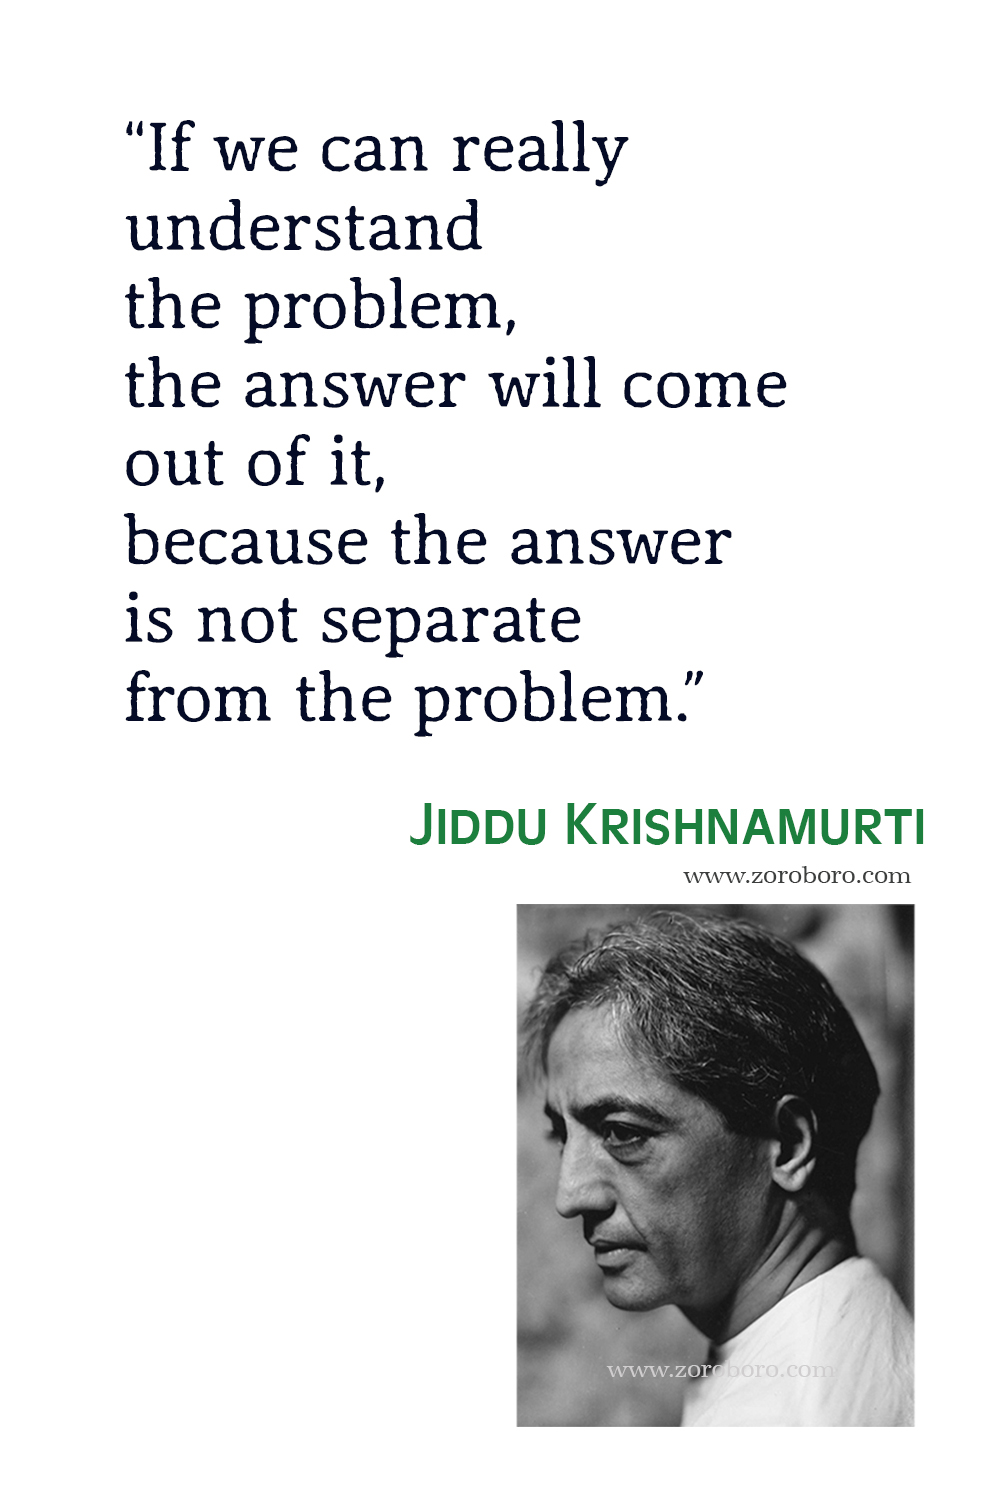 Jiddu Krishnamurti Quotes, Jiddu Krishnamurti Love, Life, School, Books Quotes. Jiddu Krishnamurti Philosophy, Jiddu Krishnamurti Teachings.